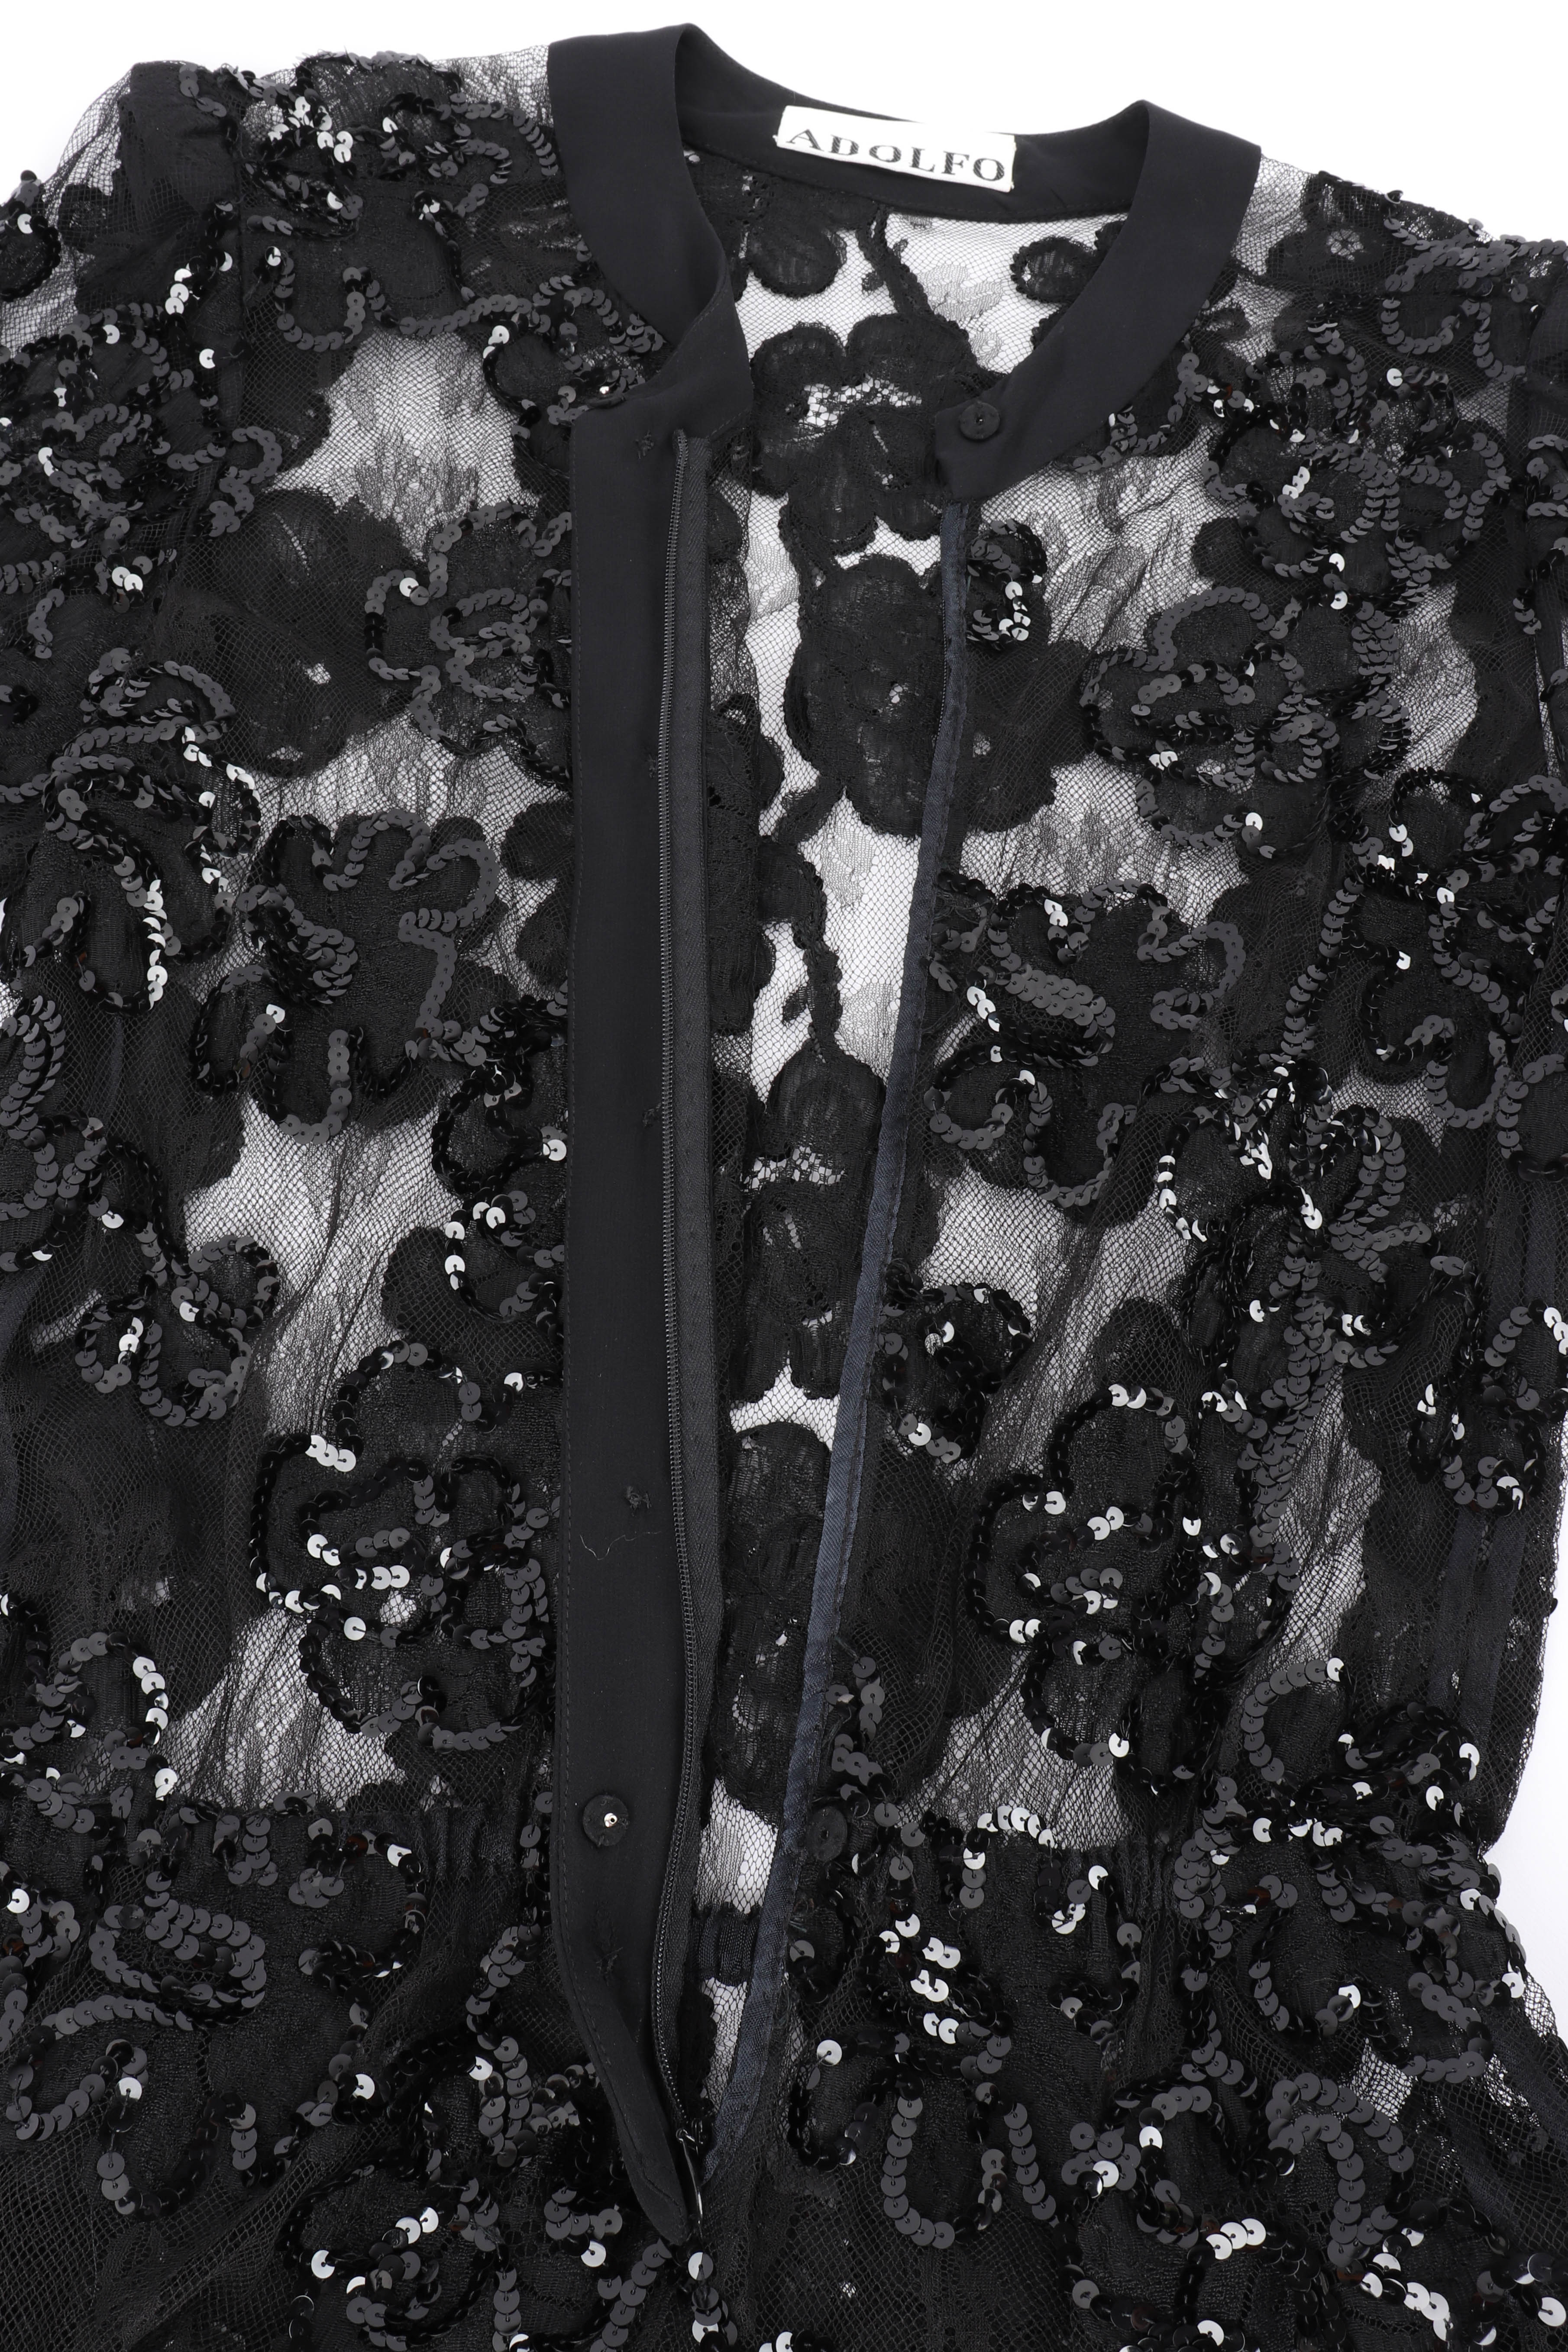 Vintage Adolfo Sequin Lace Dress zipper closeup @recessla